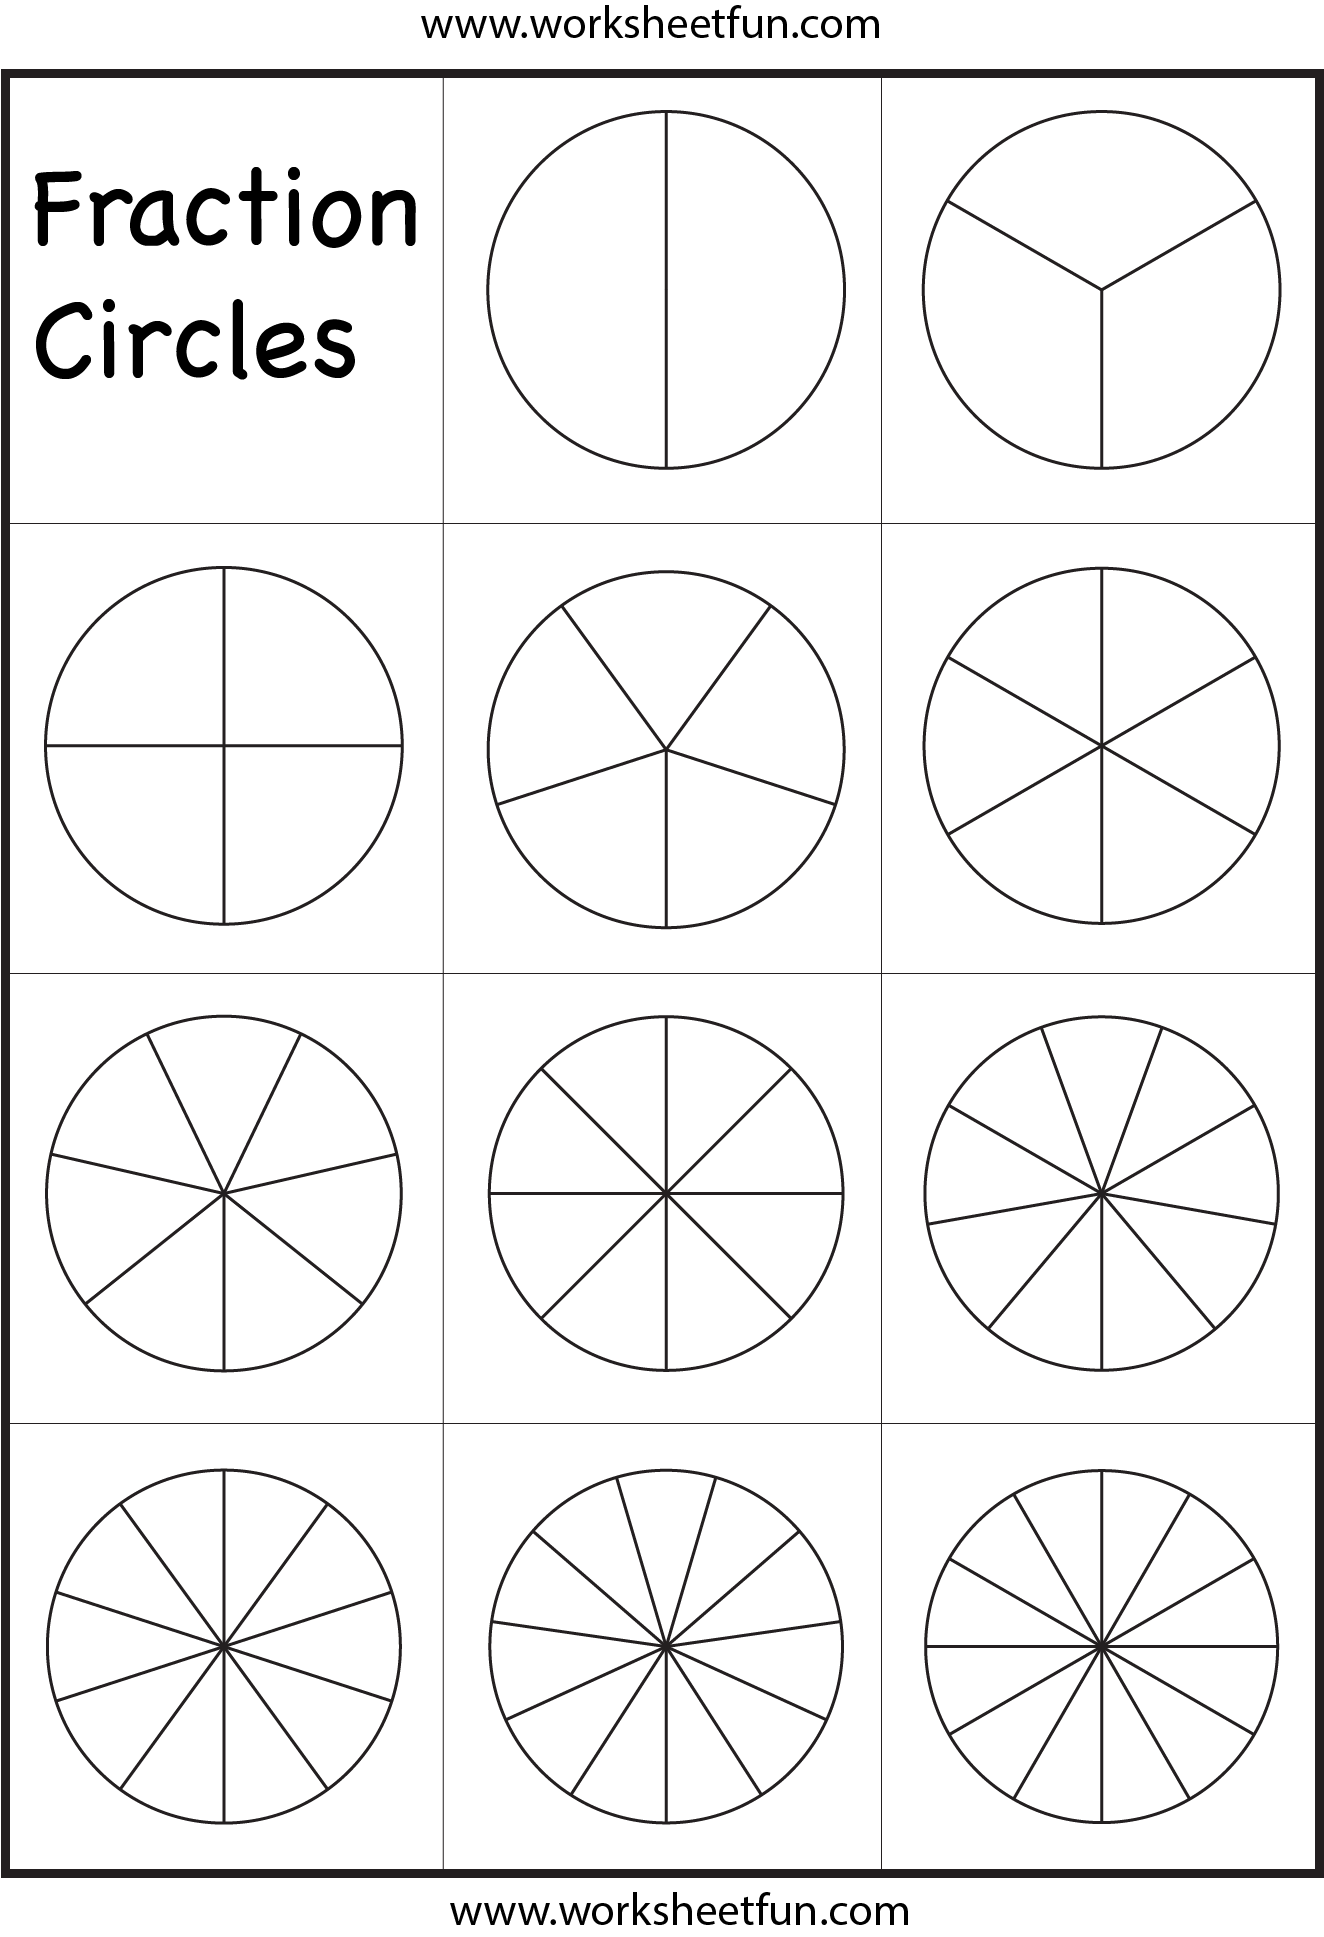 Fraction Circles Template – Printable Fraction Circles – 1 Worksheet